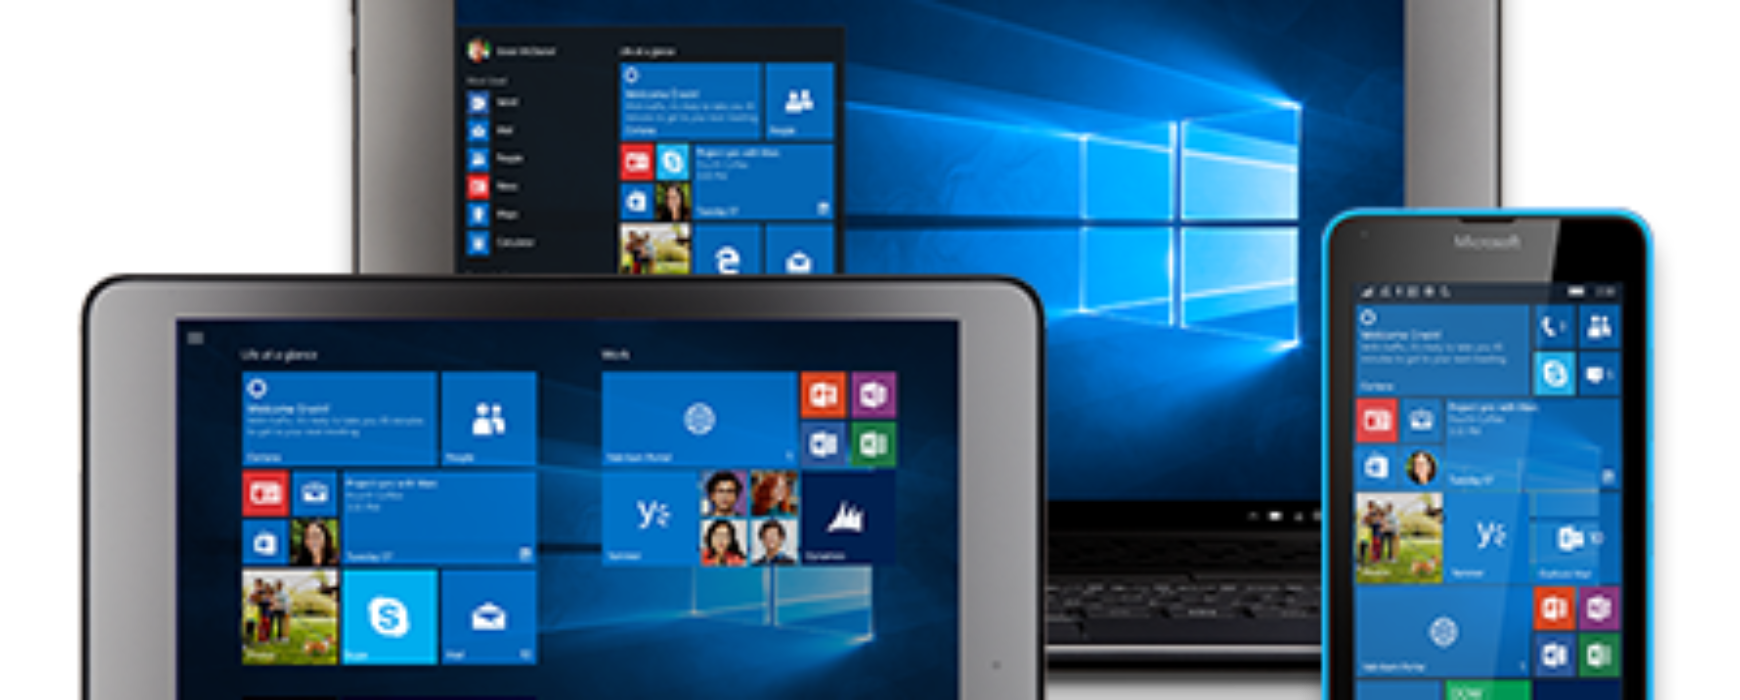 Windows 10 free upgrade offer ending in July